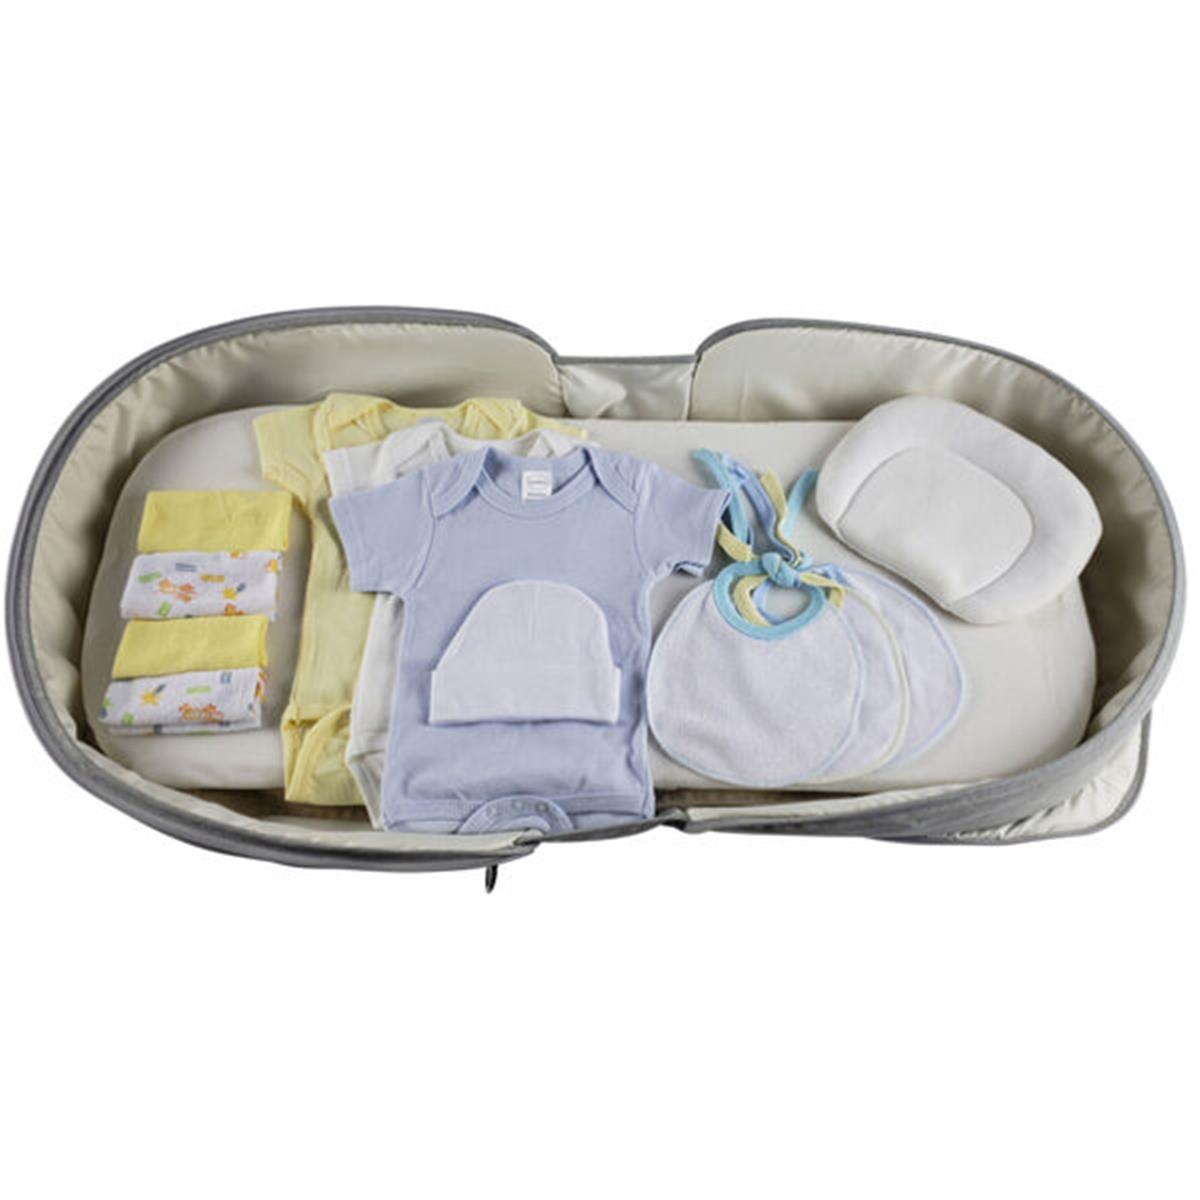 Bambini 808-Boys-12-Pieces Boys Baby Clothing Starter Set with Diaper Bag, Blue - Newborn - 12 Piece